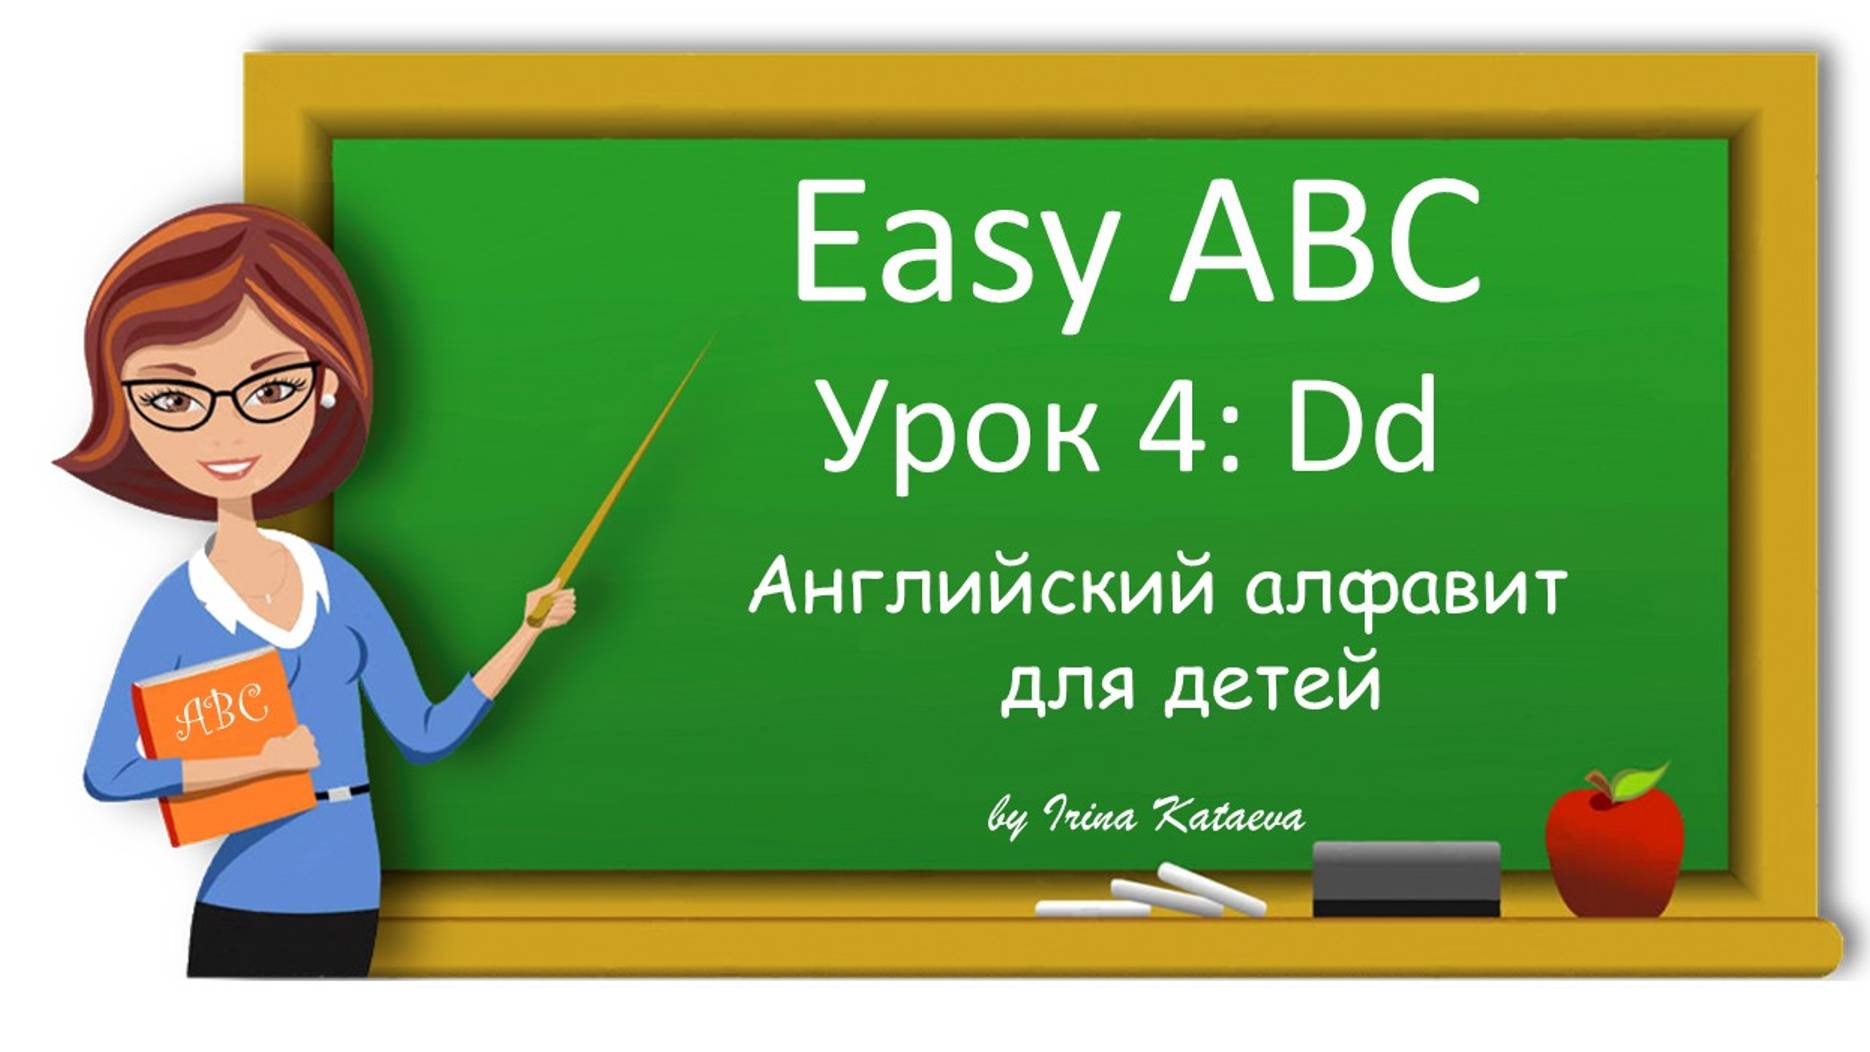 Урок 4. Dd (Easy ABC)